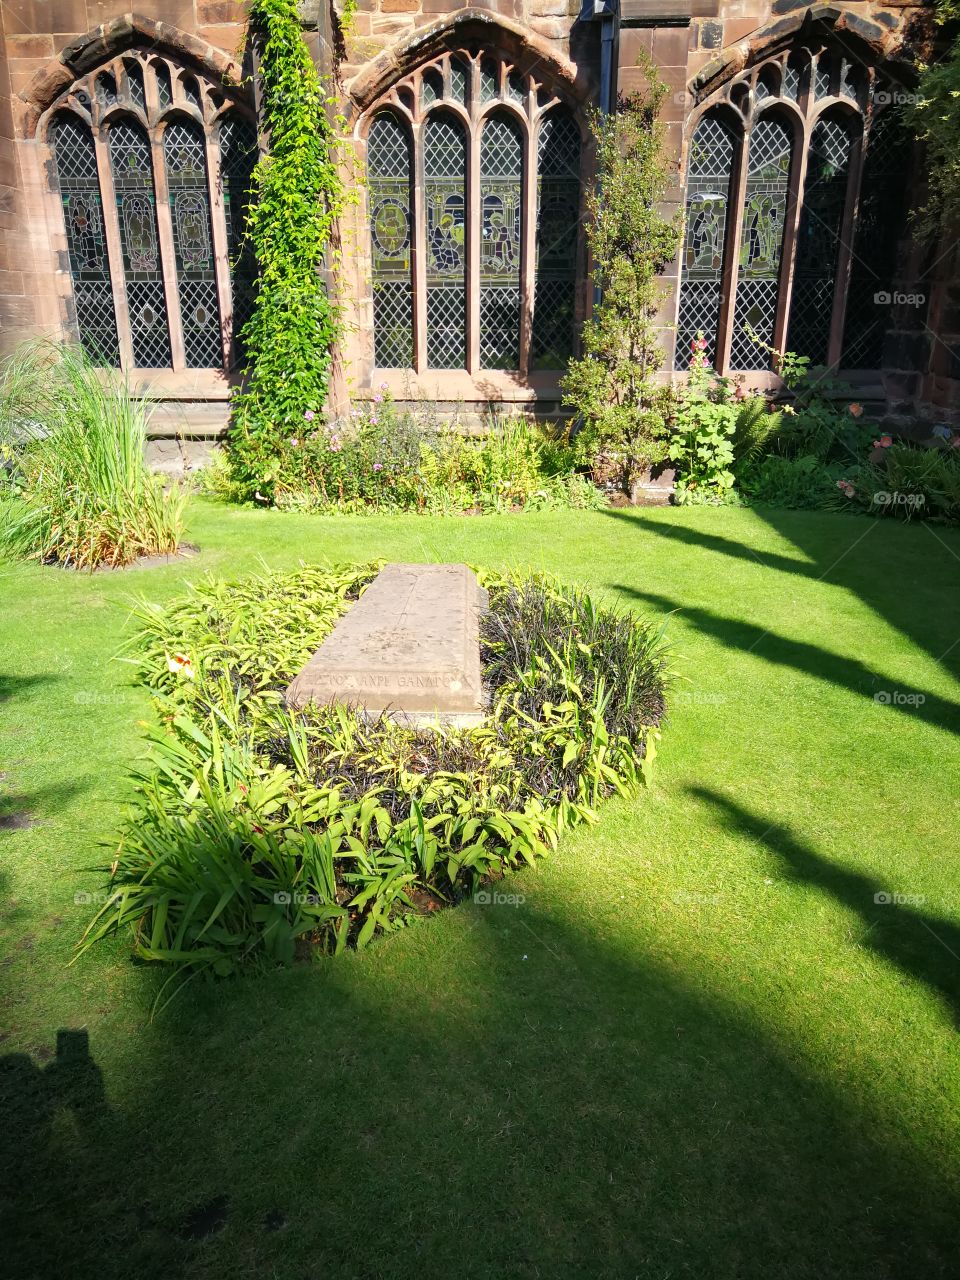 Cathedral garden